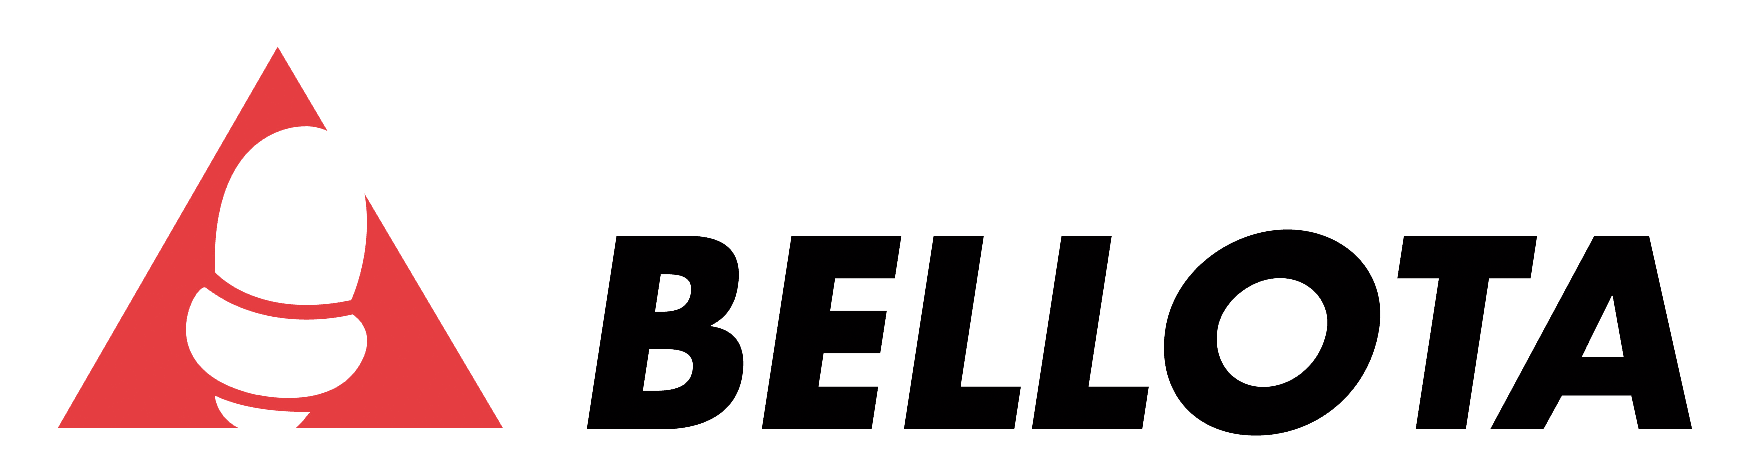 Logo Bellota Indauto